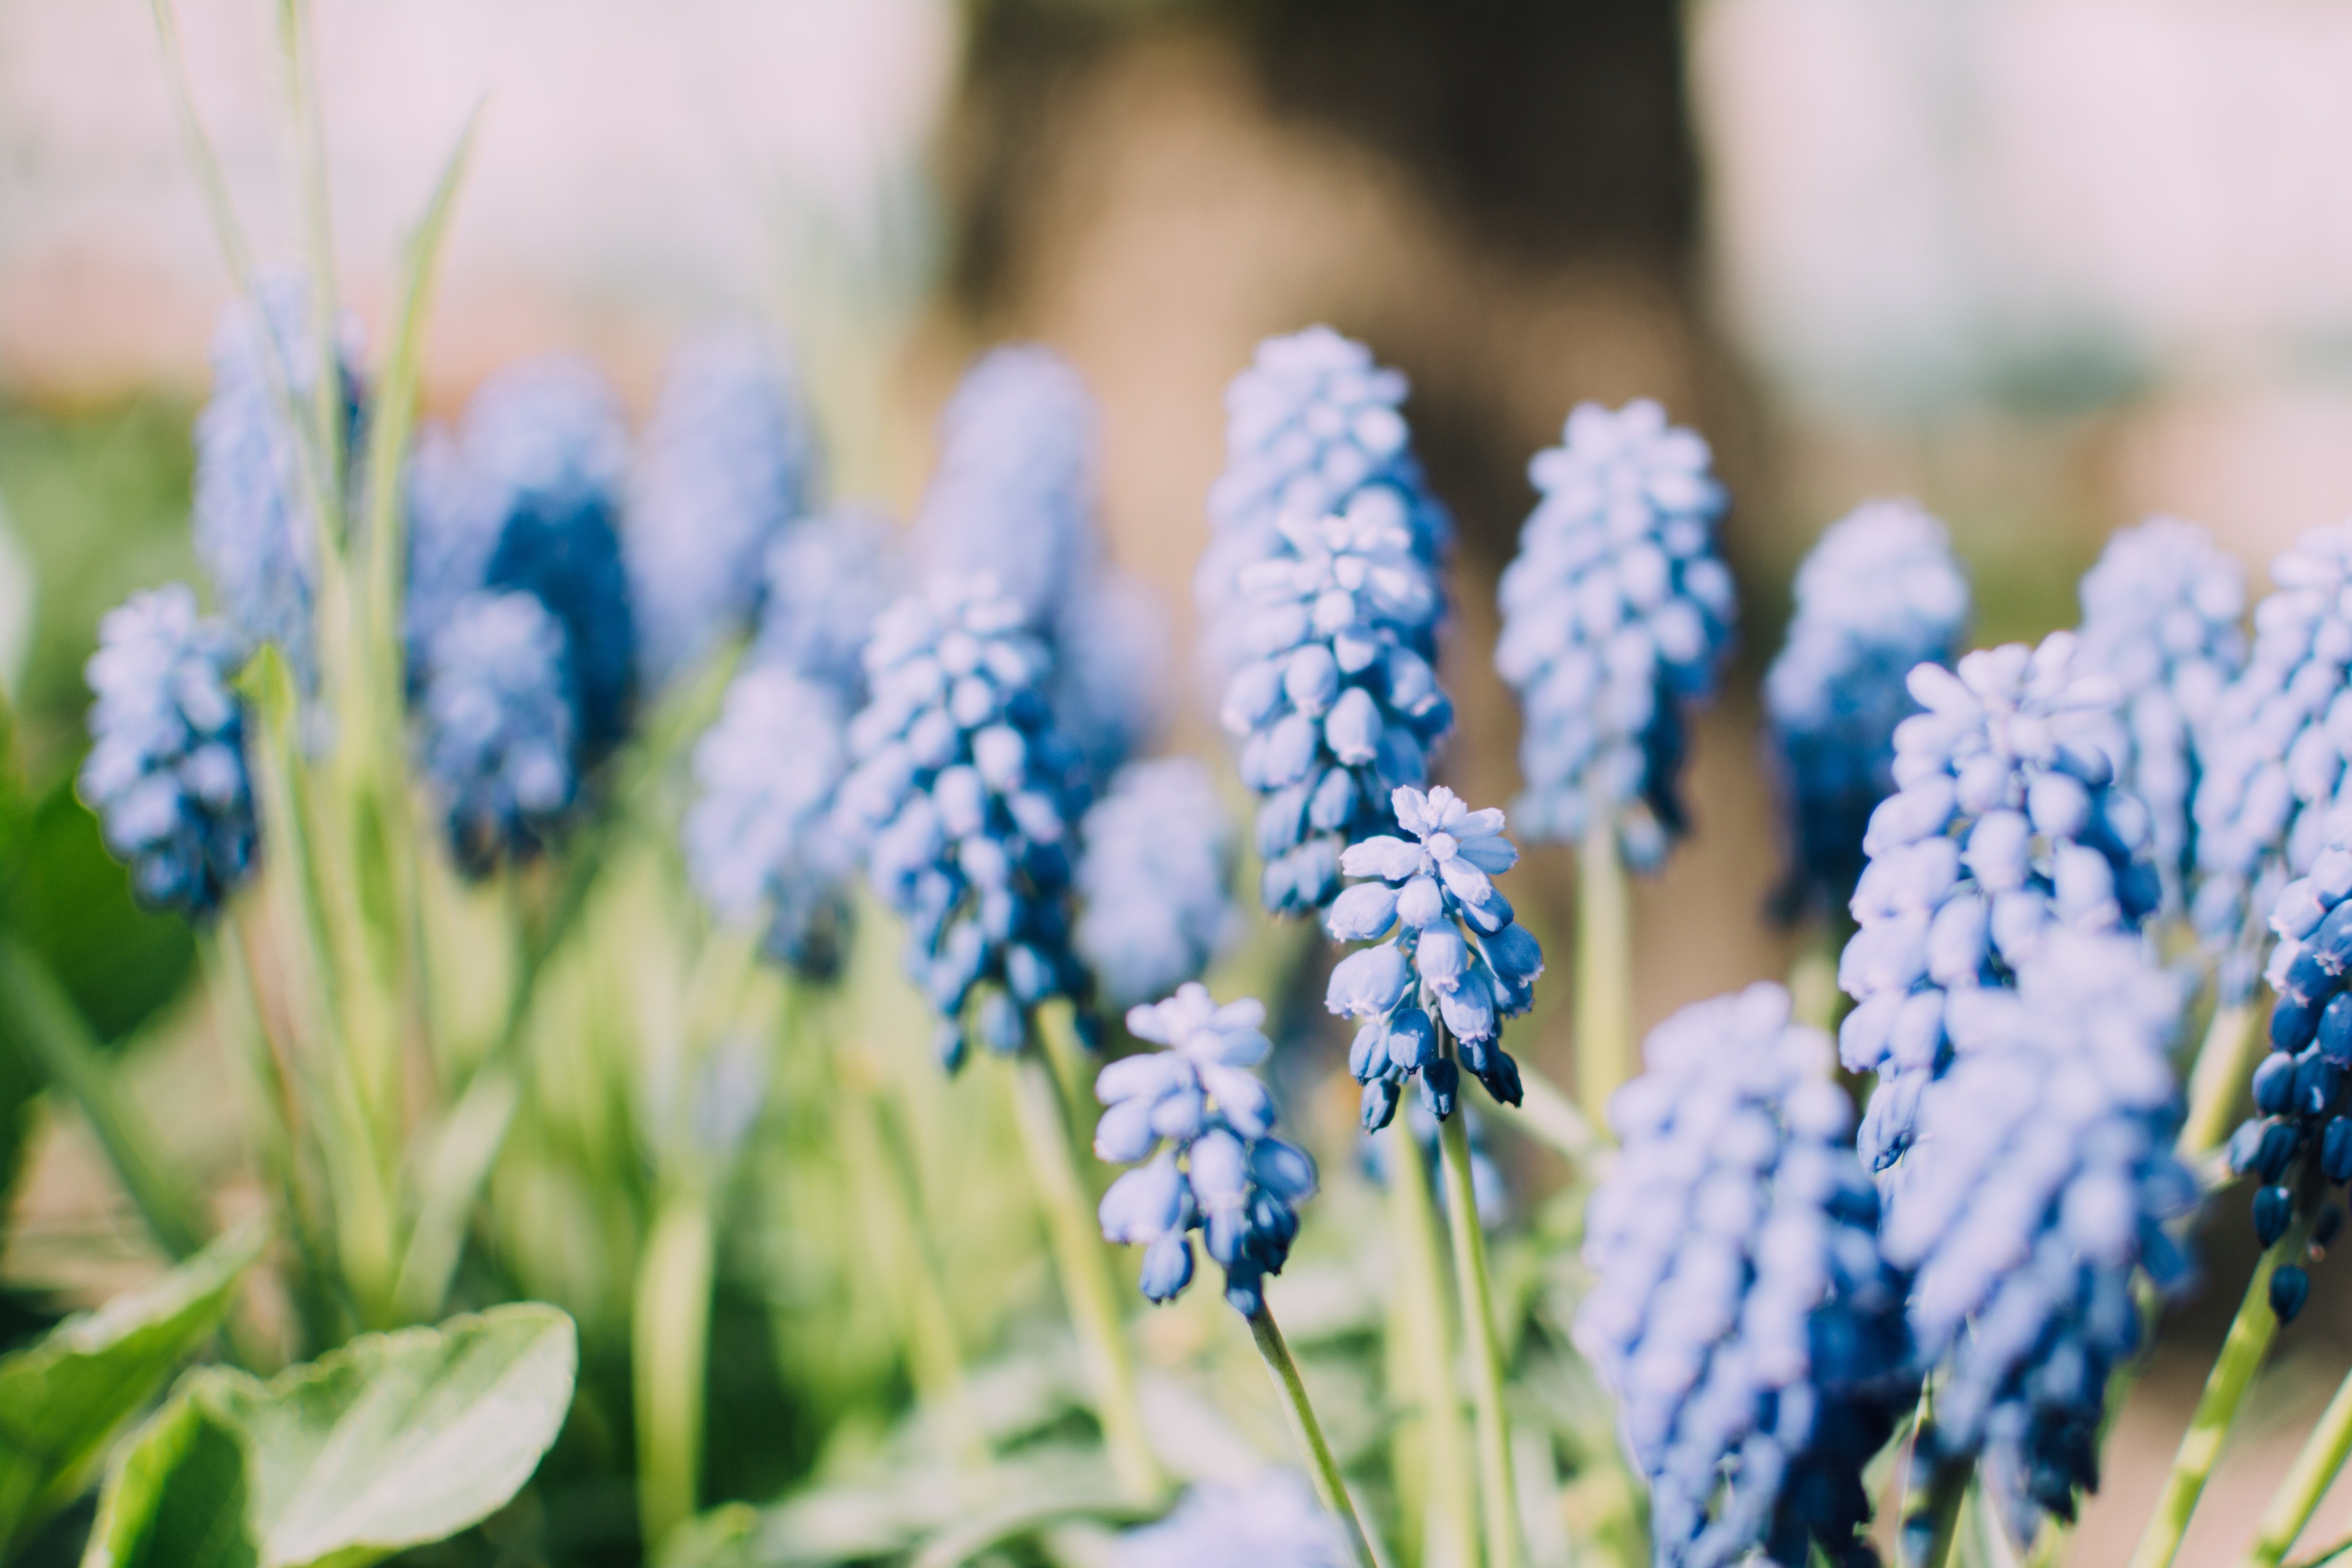 Shrub with blue flowers